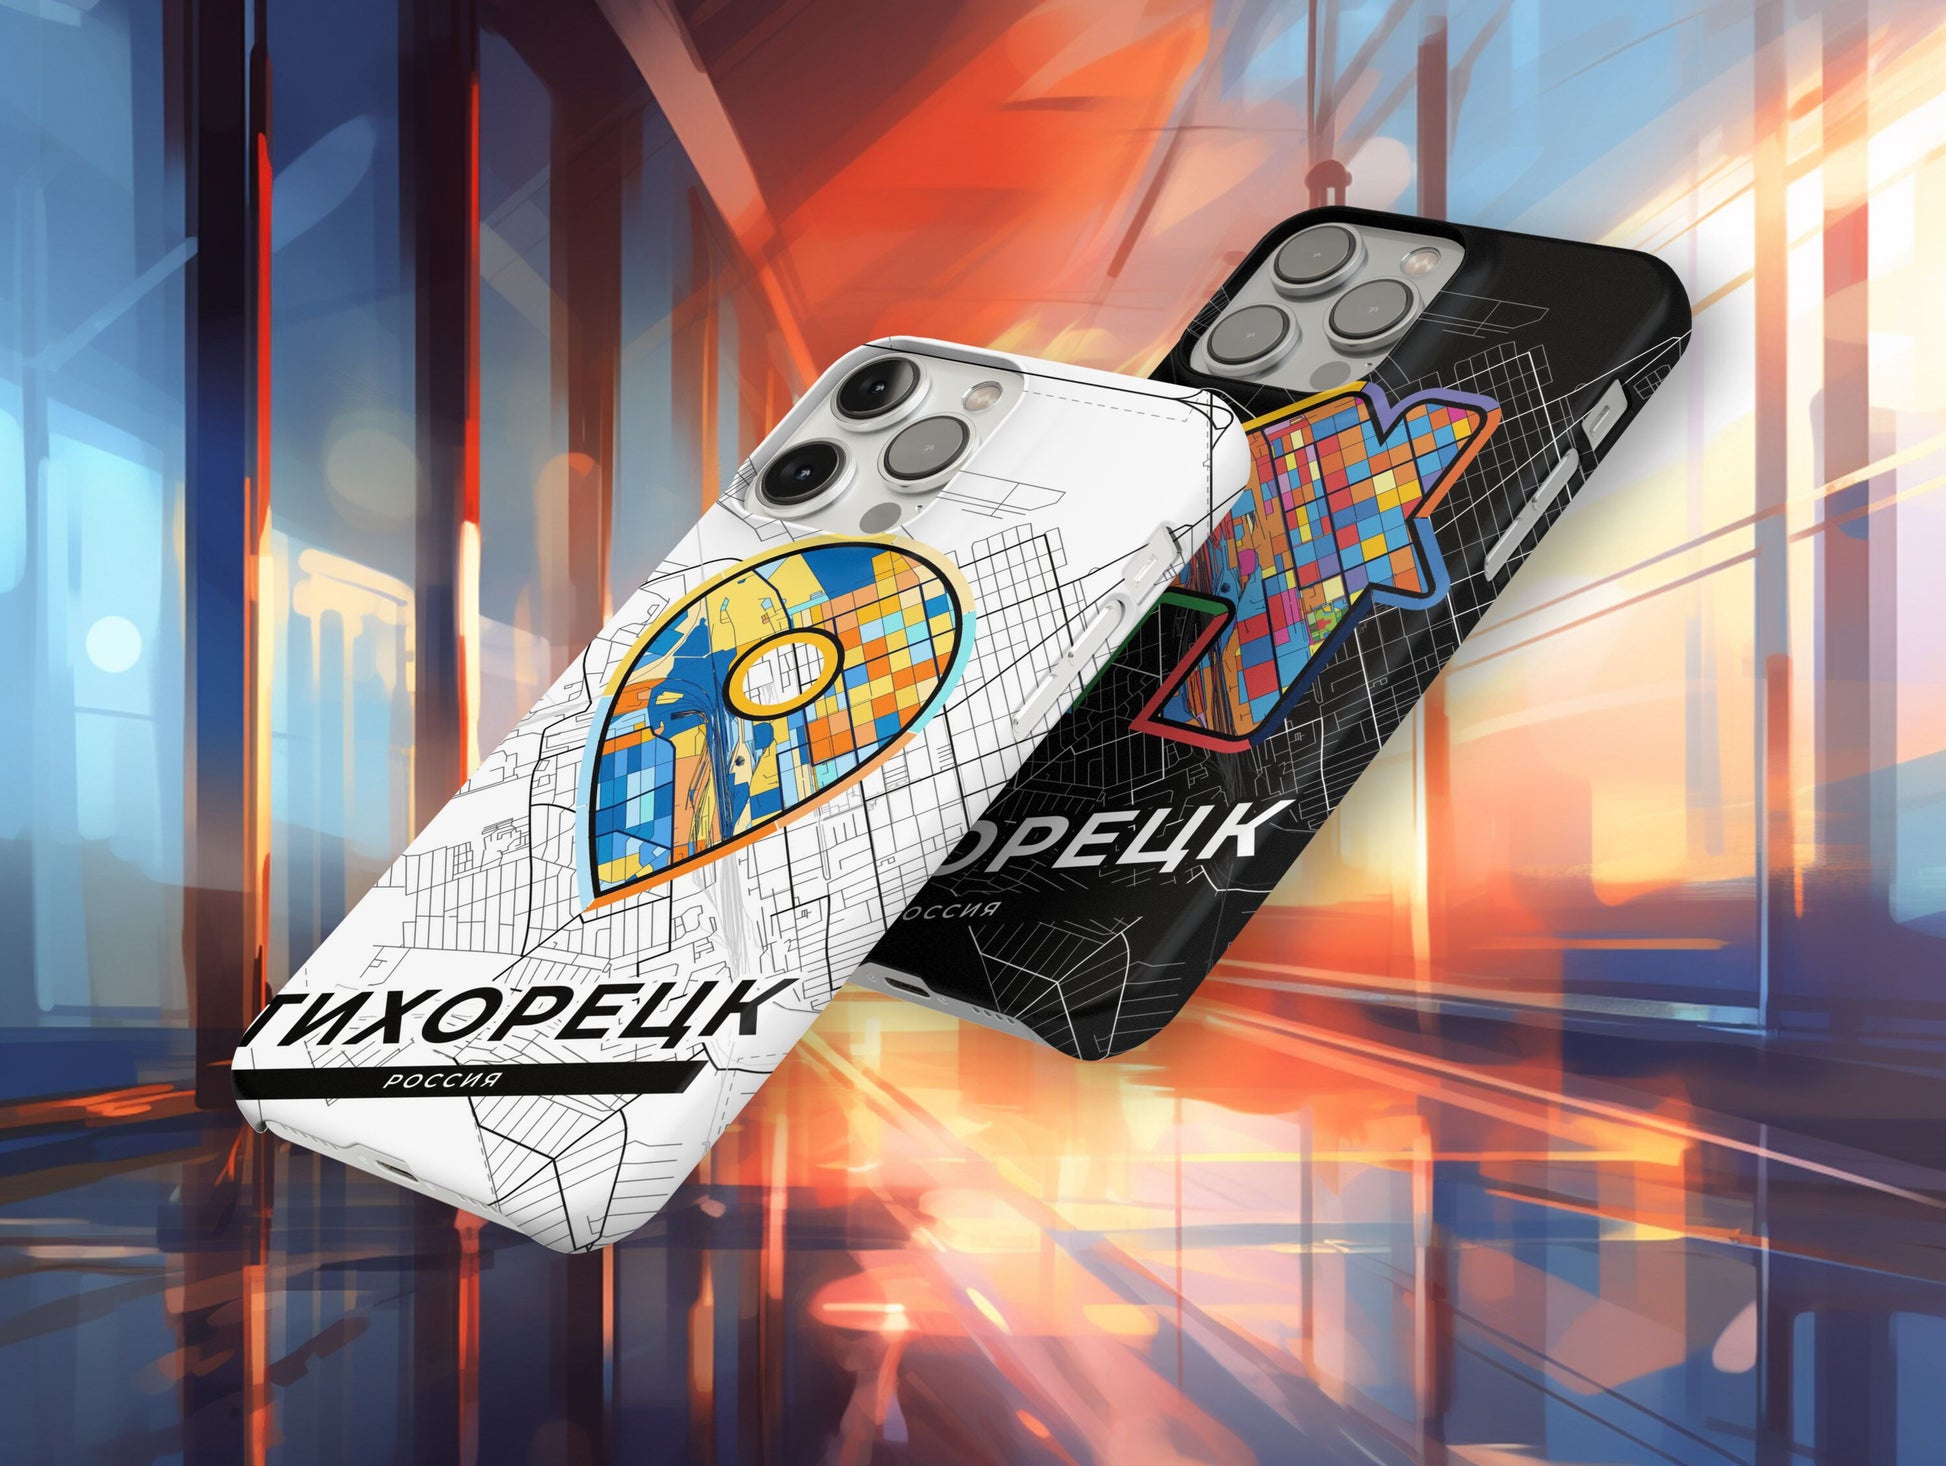 Tikhoretsk Russia slim phone case with colorful icon